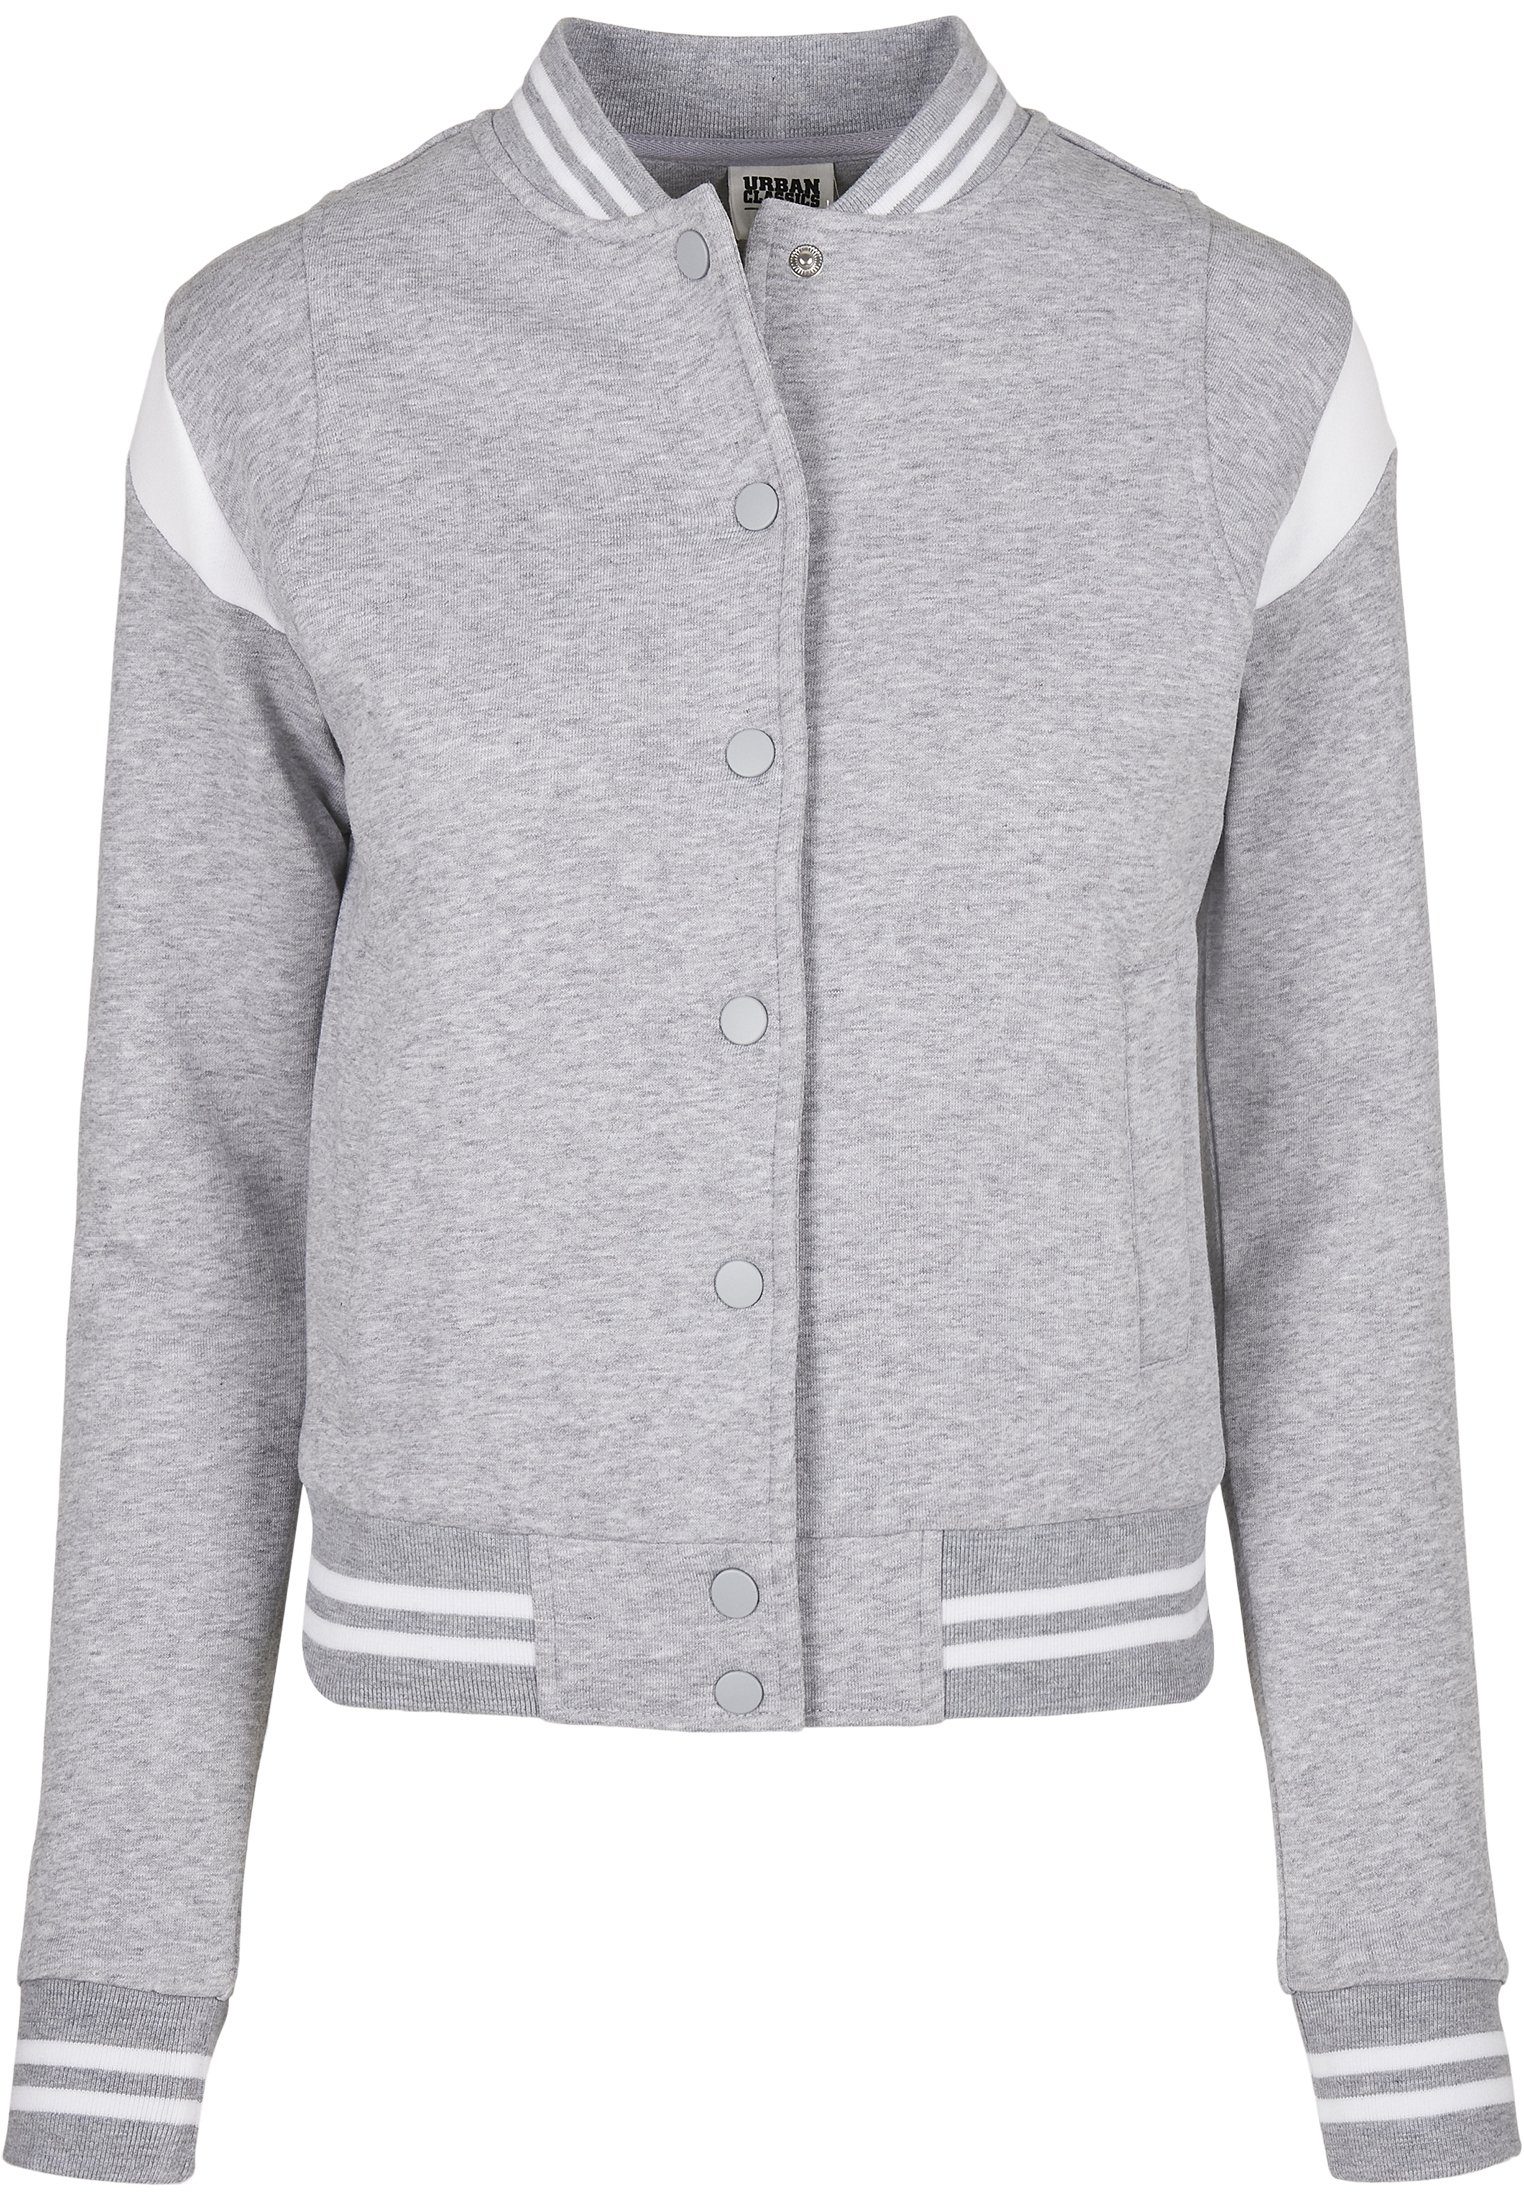 URBAN CLASSICS Collegejacke Damen Ladies Inset grey/white Jacket Sweat (1-St) College Organic